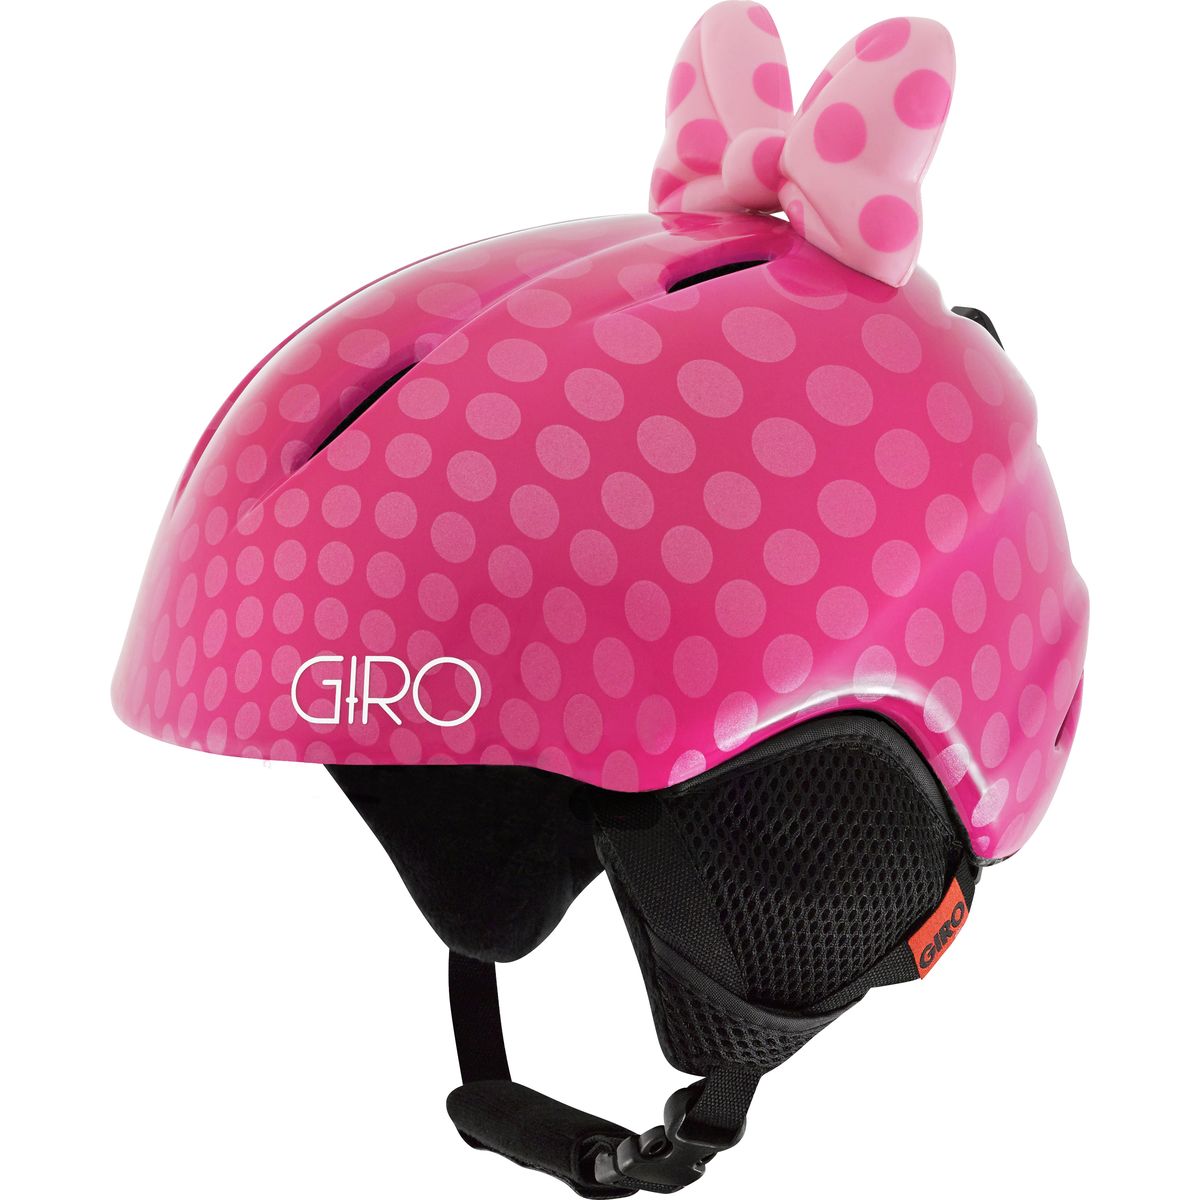 Giro Launch Helmet - Kids' Pink Bow Polka Dots